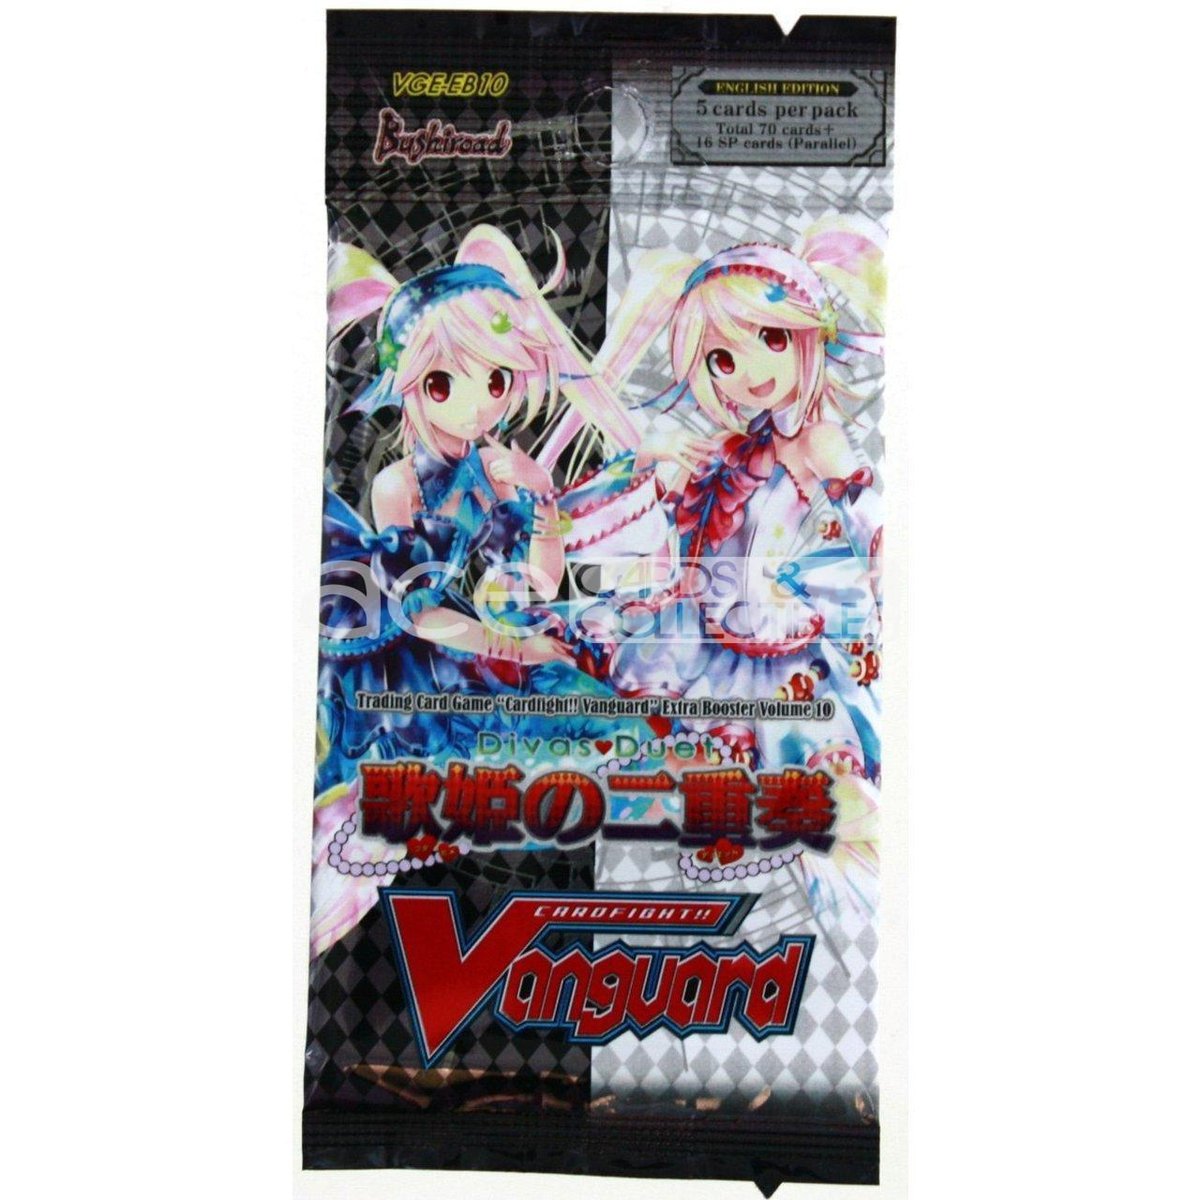 Cardfight Vanguard Divas Duet [VGE-EB10] (English)-Single Pack (Random)-Bushiroad-Ace Cards & Collectibles